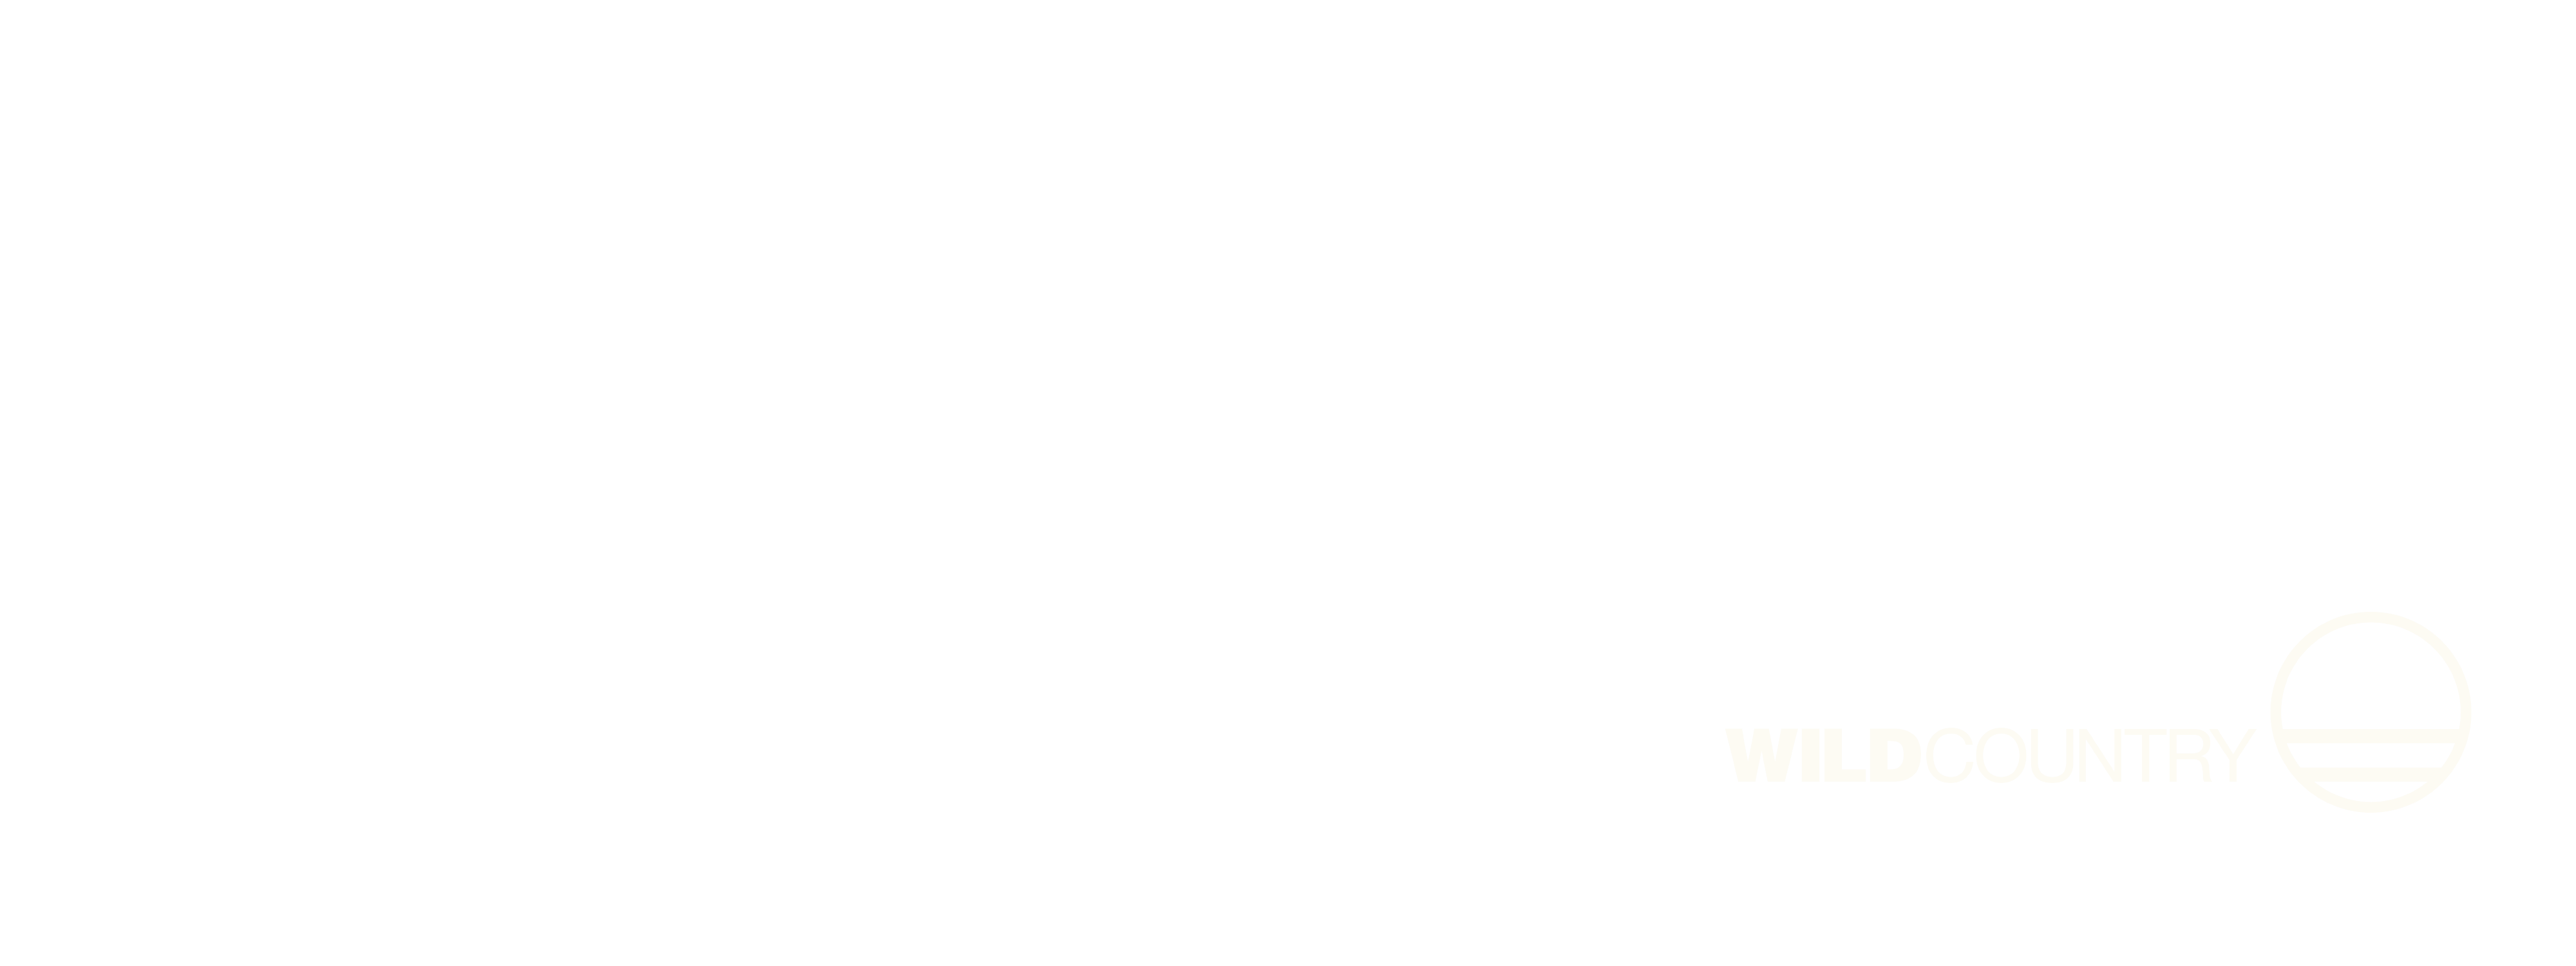 team spirit sponsored by wild country